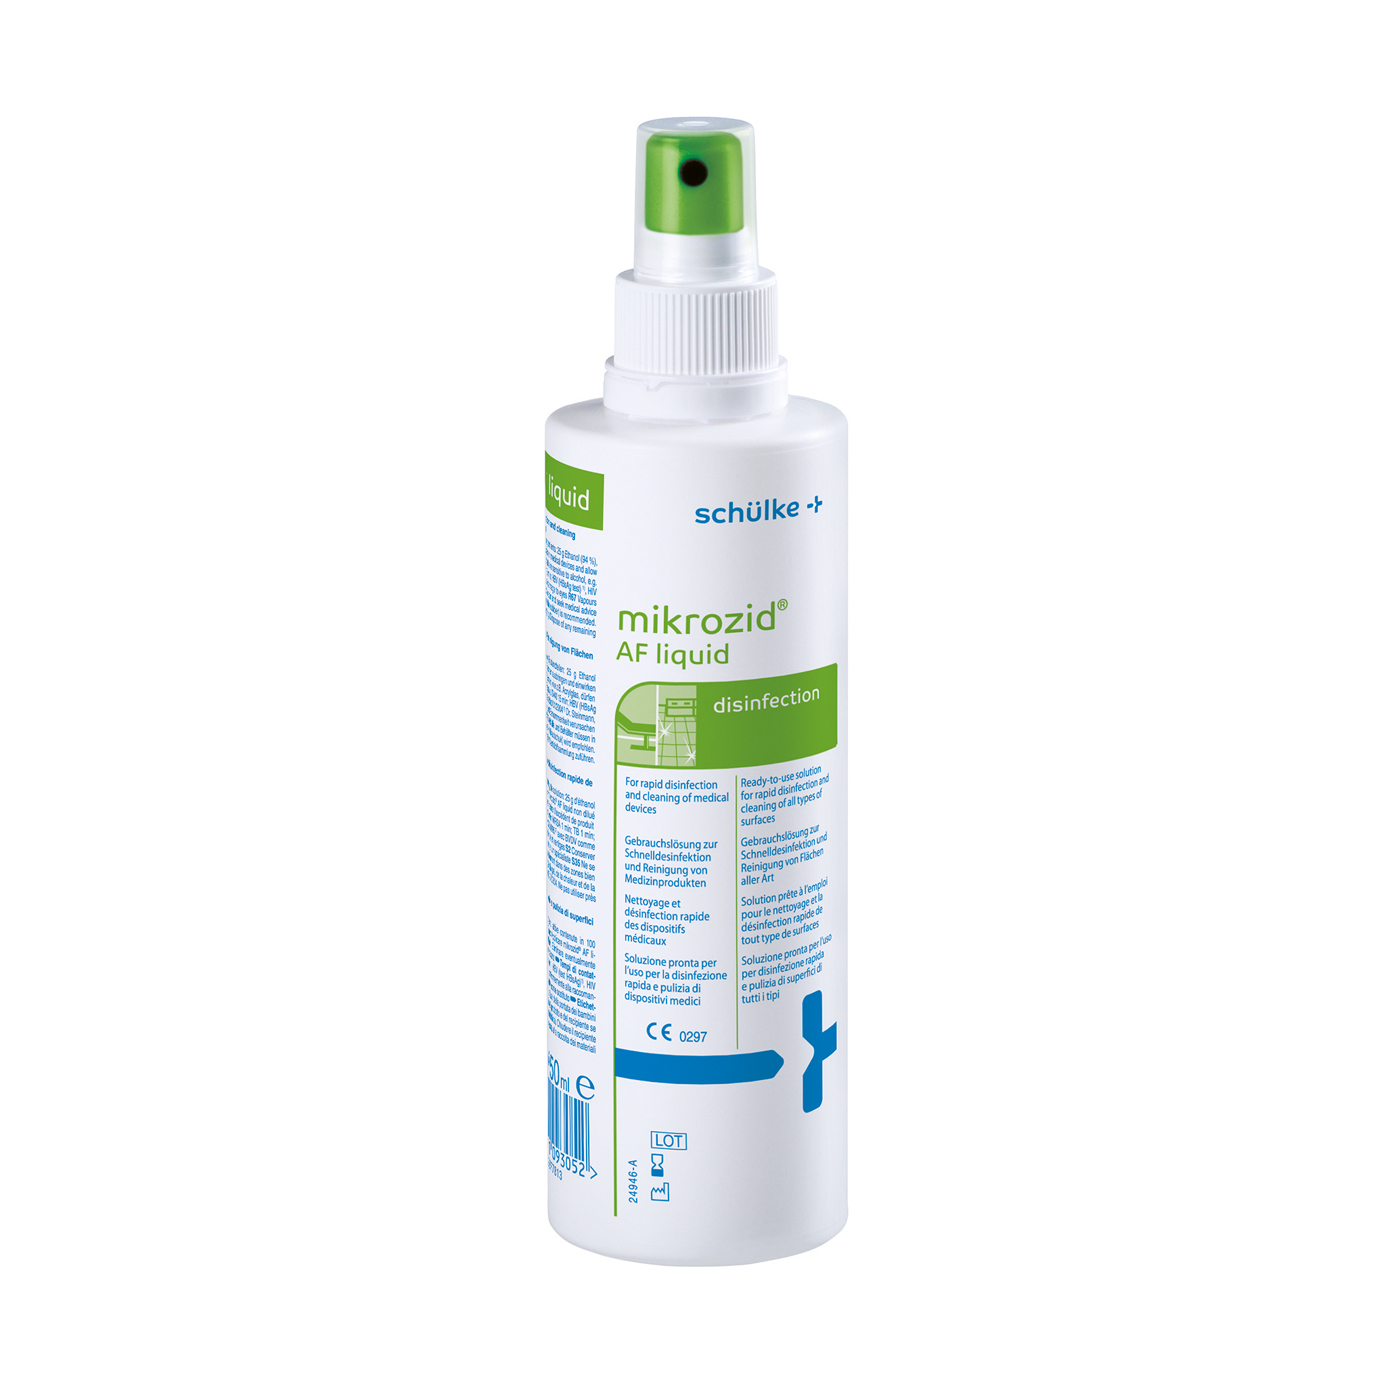 mikrozid AF Liquid Surface Disinfectant - 250 ml